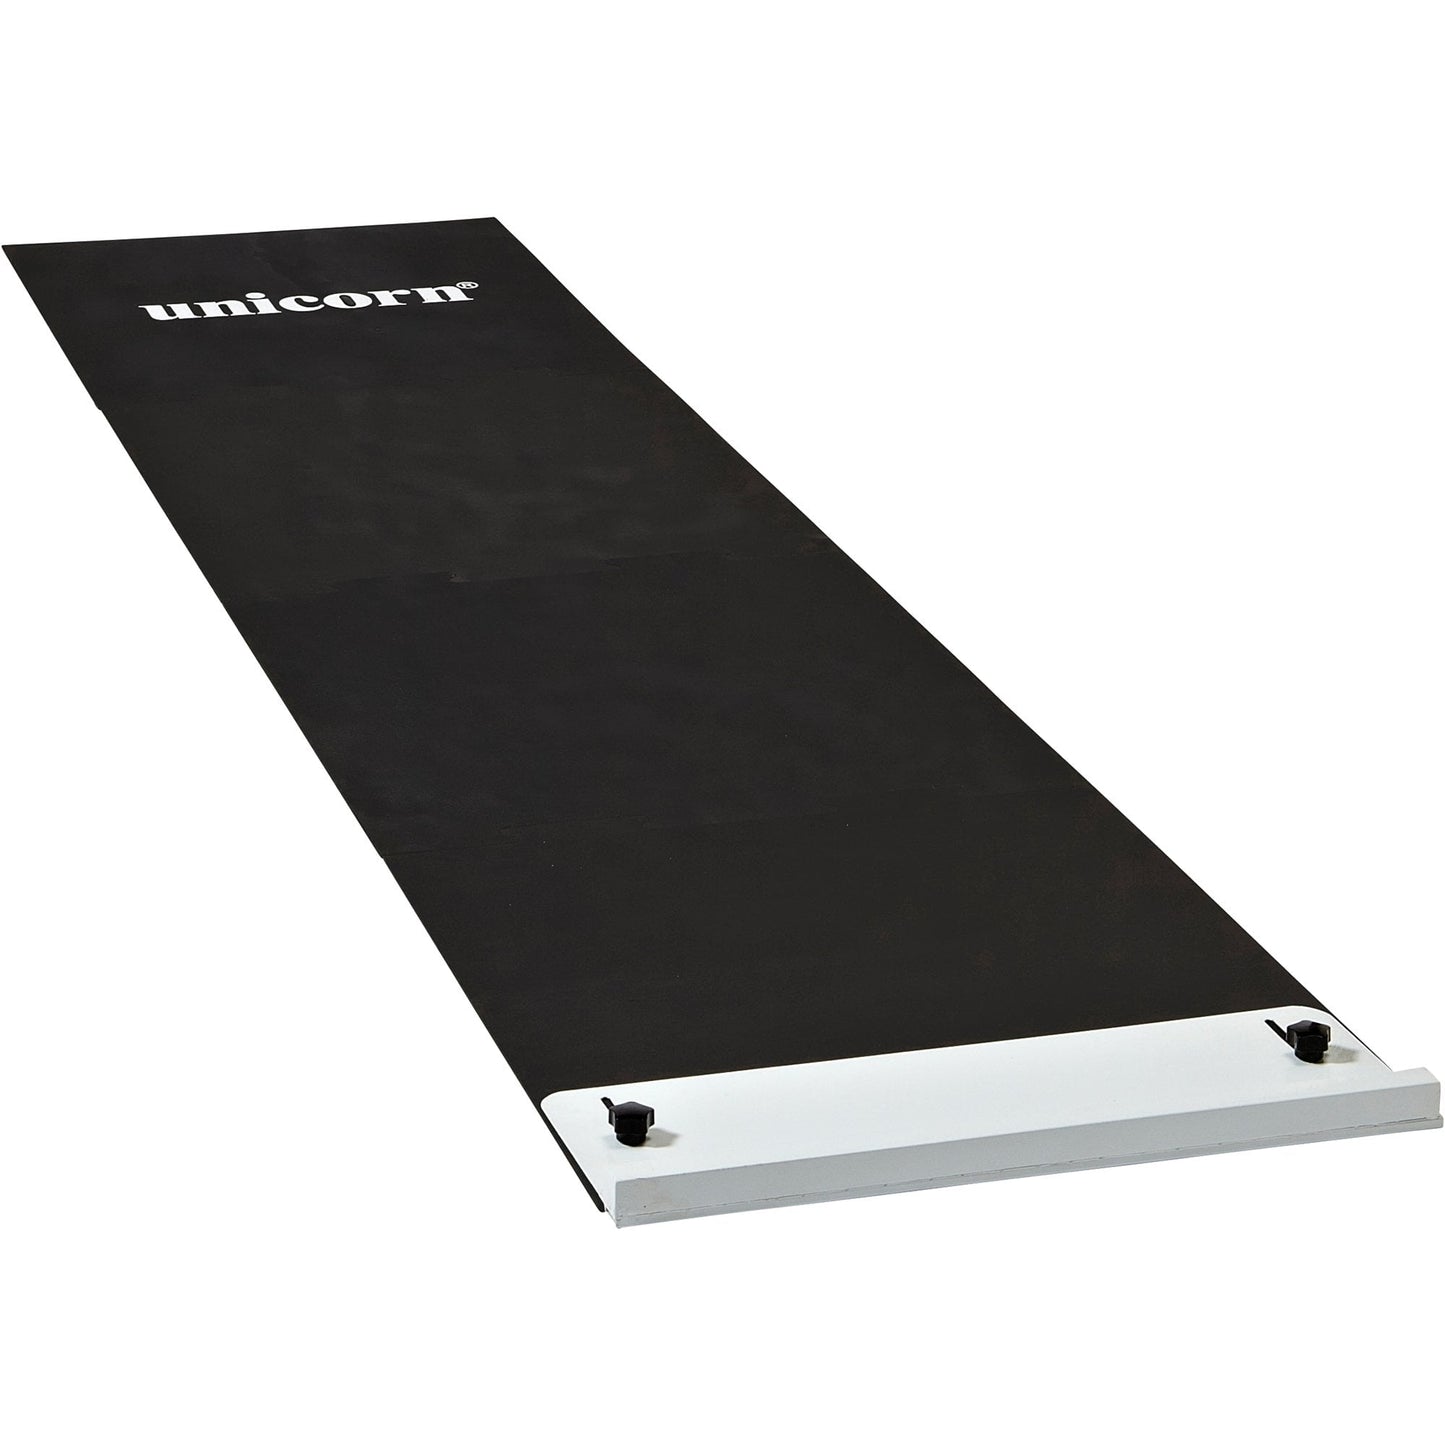 Unicorn Dart Mat - Portable - Oche And - Lightweight Raised Black